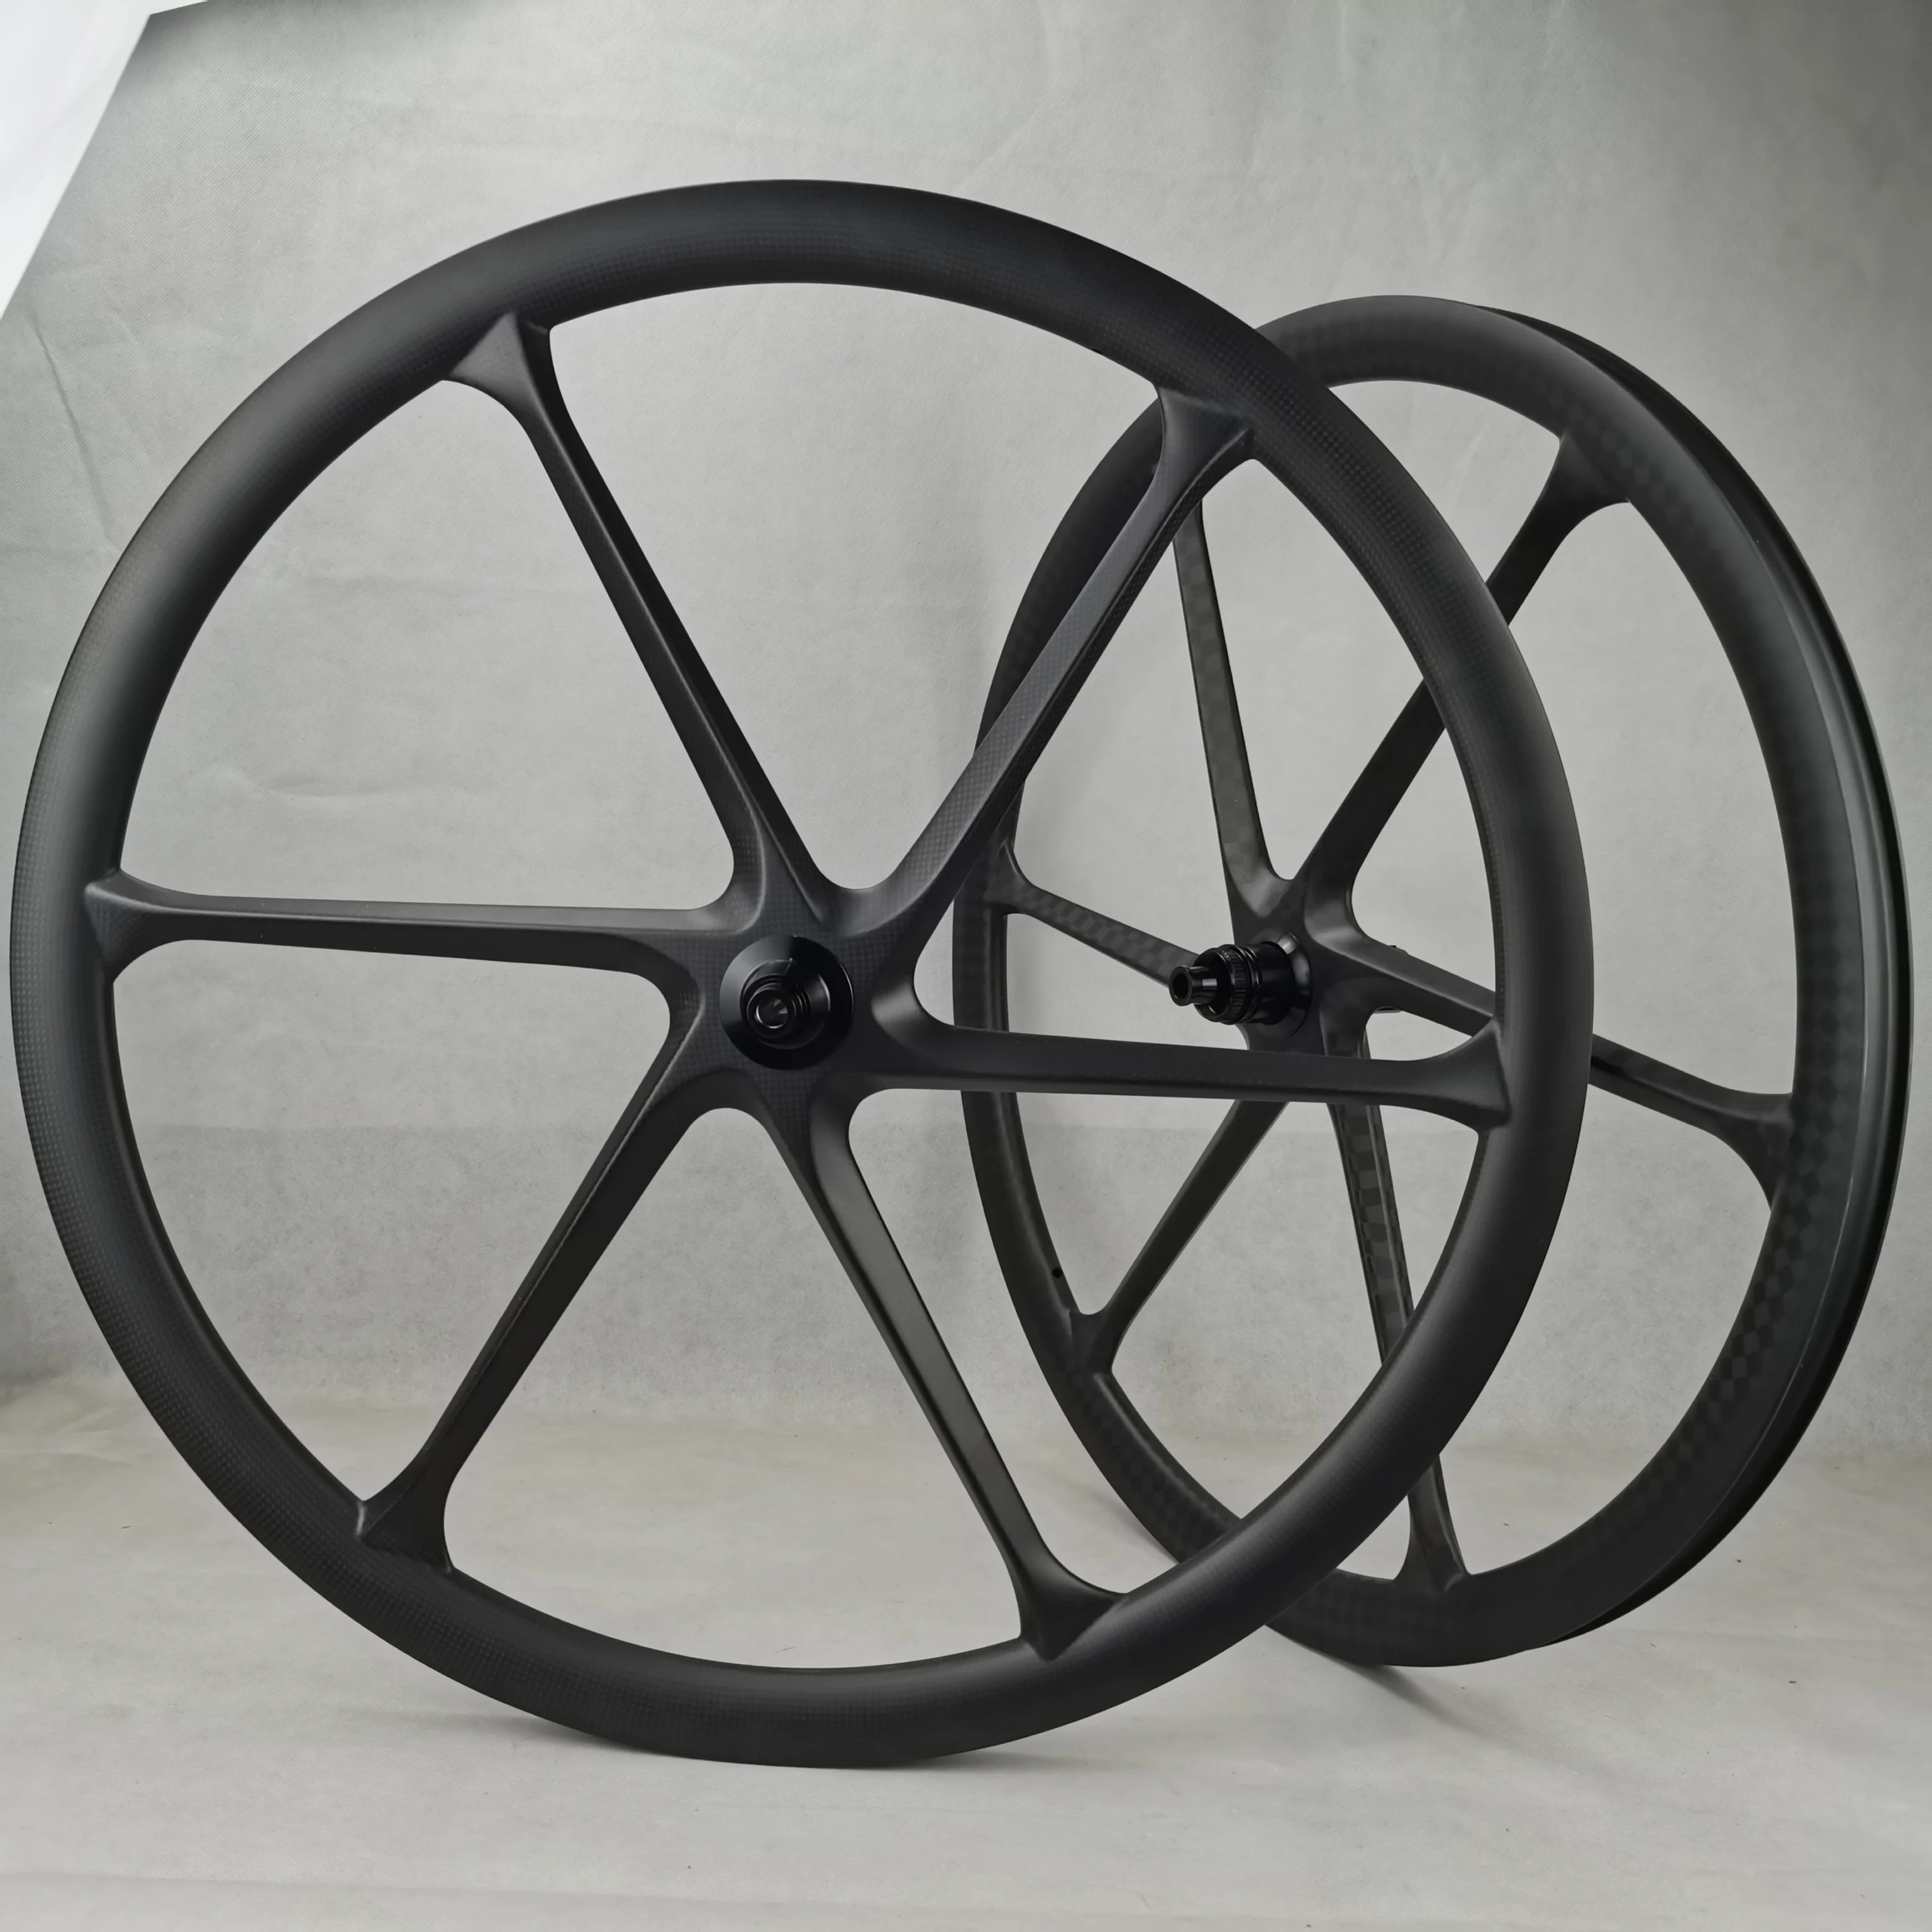 

[SCGD6-2835] 700c 28mm wide 35mm depth carbon 6 spoke Gravel carbon wheels Tubuless Tubular Hookless road Disc brakespoke wheels